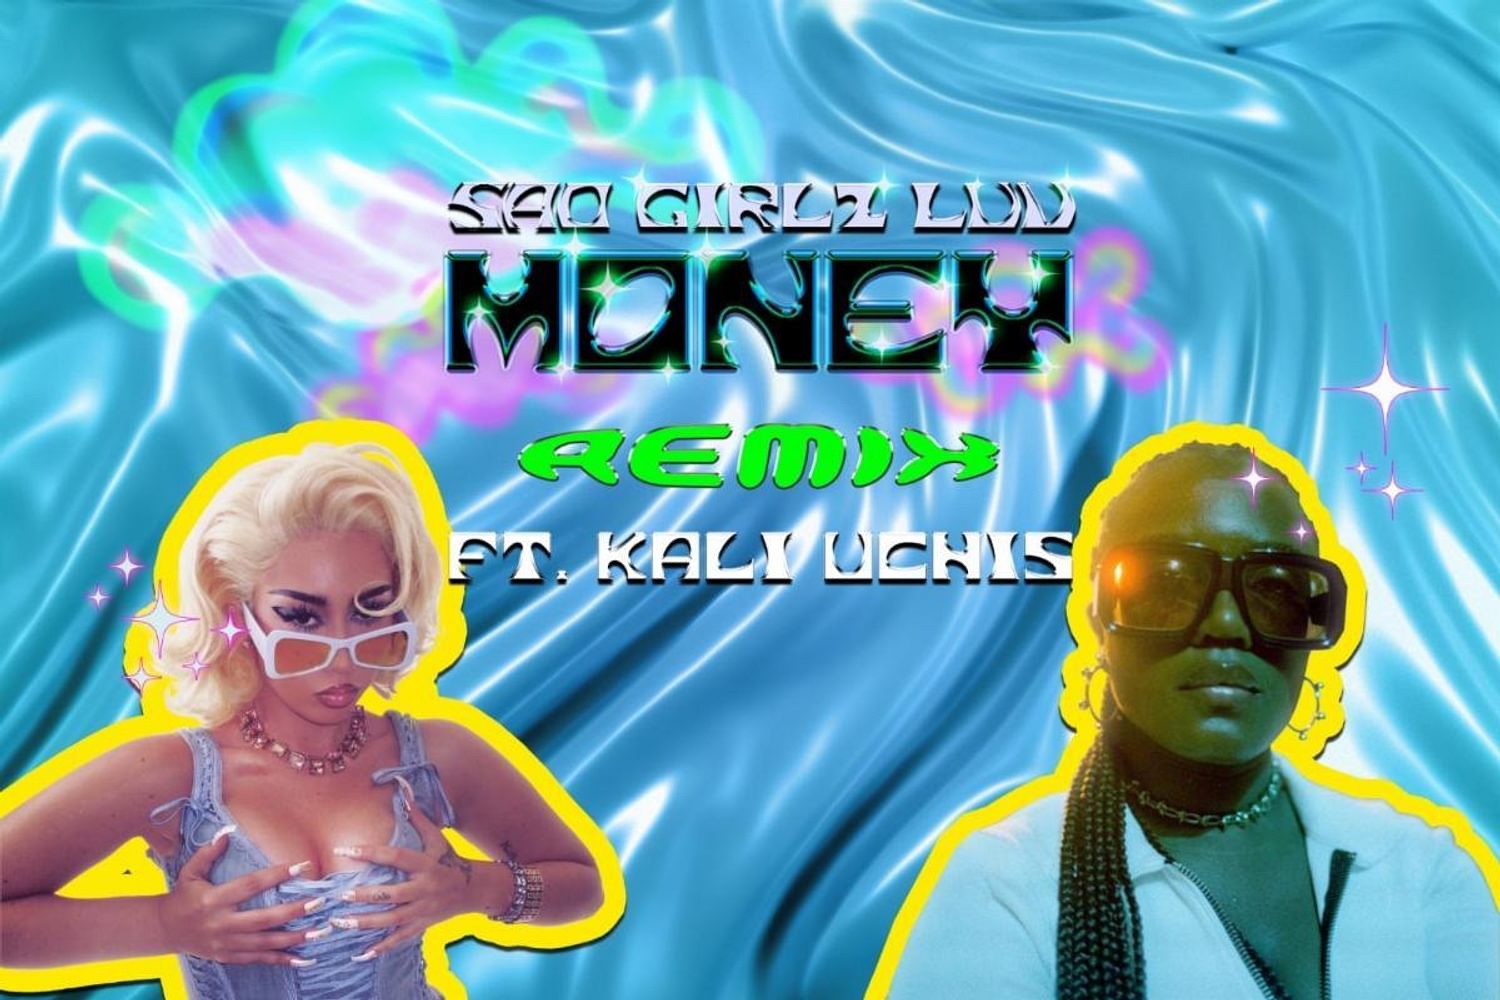 Amaarae teams up with Kali Uchis for ‘SAD GIRLZ LUV MONEY’ remix